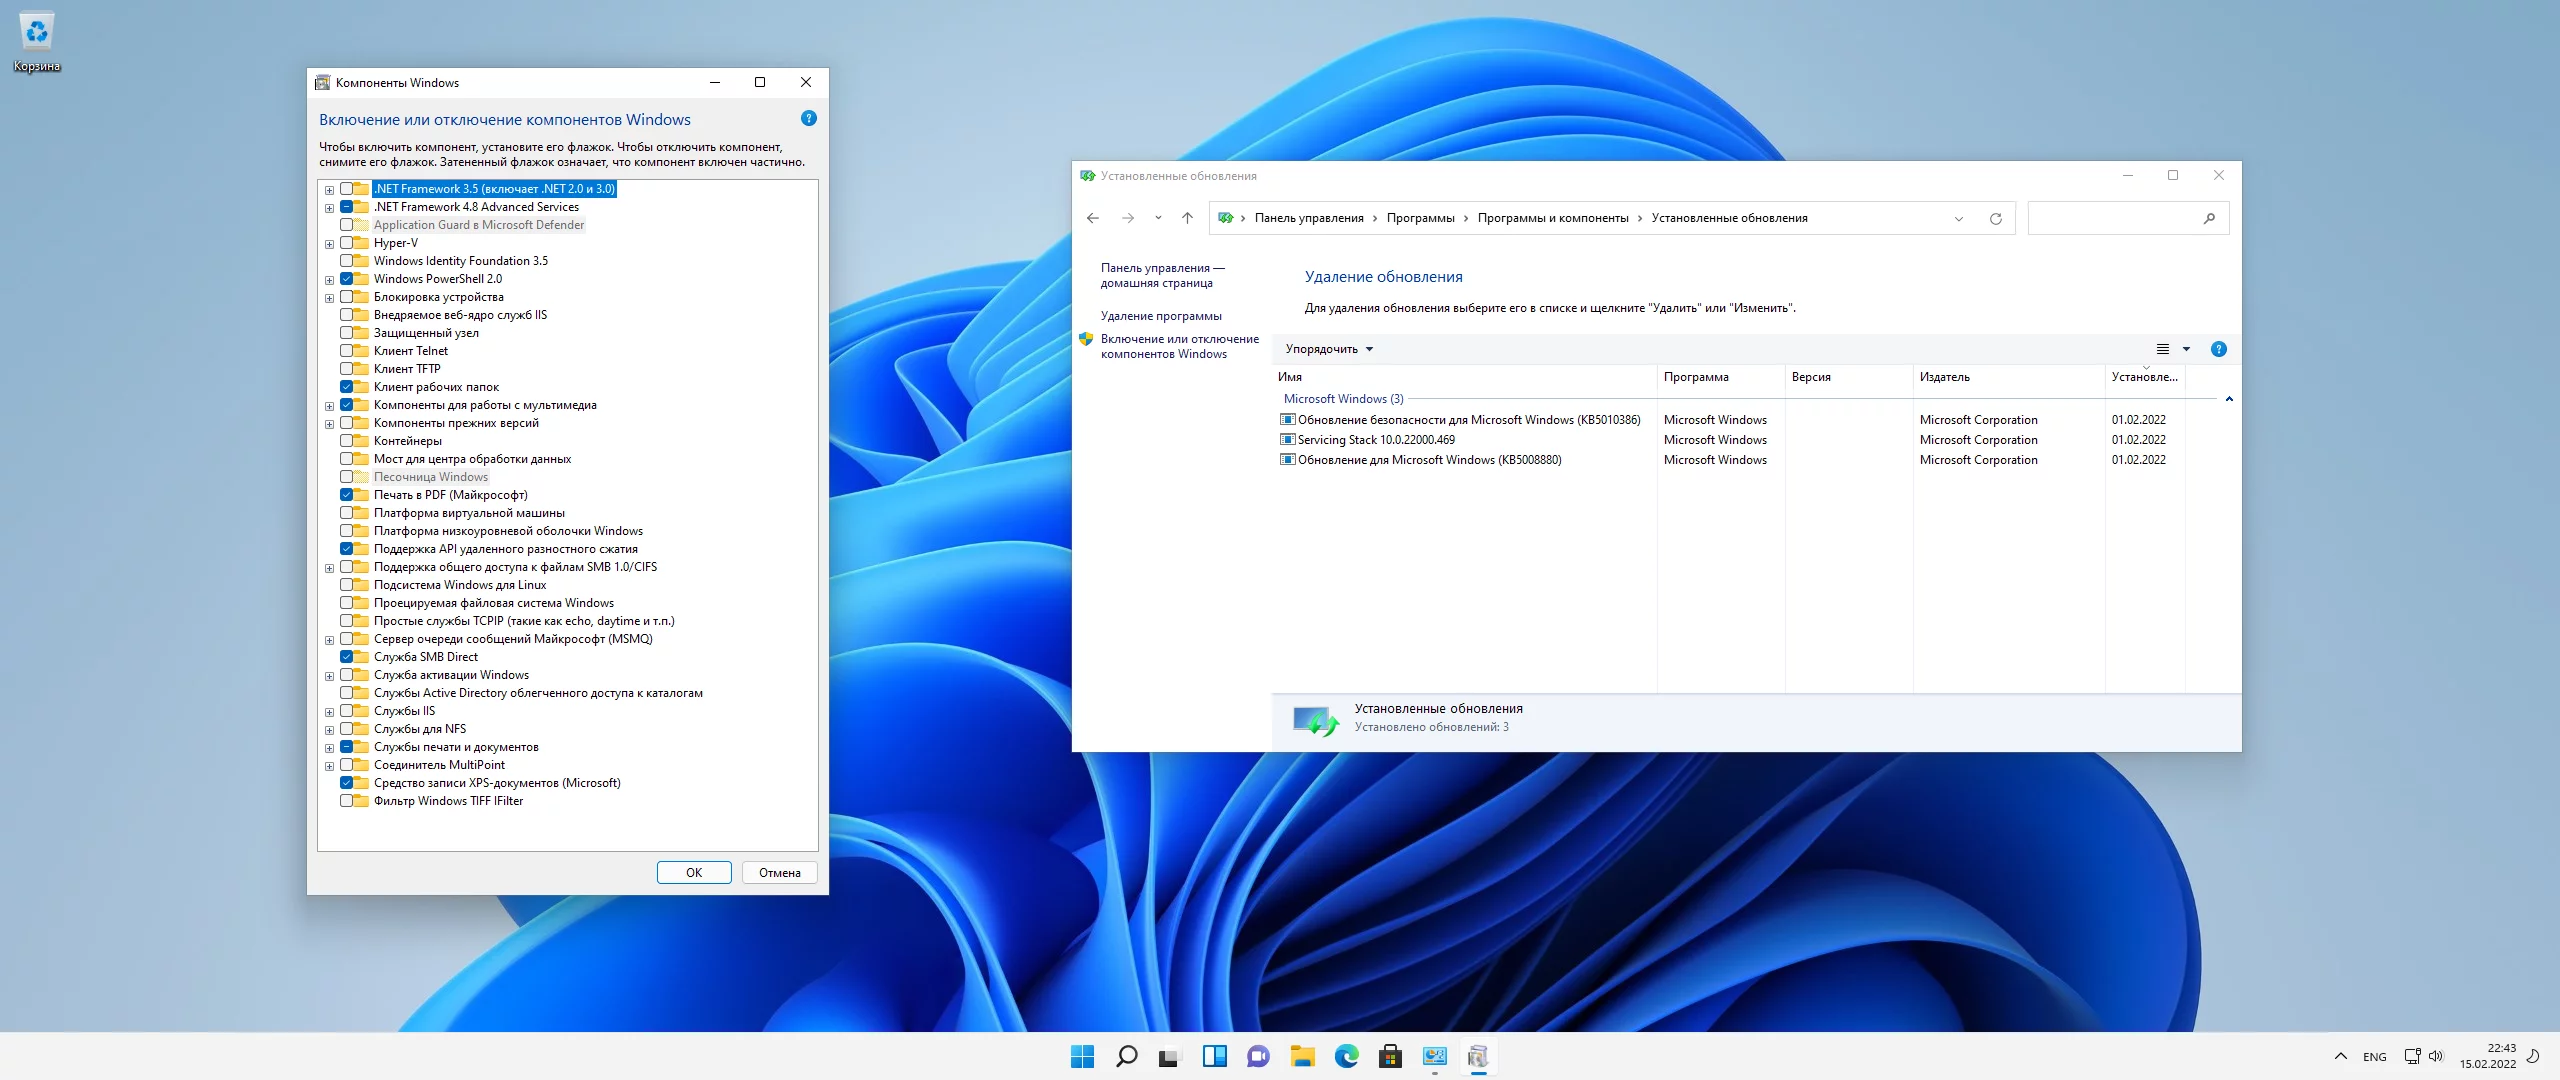 Windows 11 [10.0.22000.493], Version 21H2 (Updated February 2022) - Оригинальные образы от Microsoft MSDN